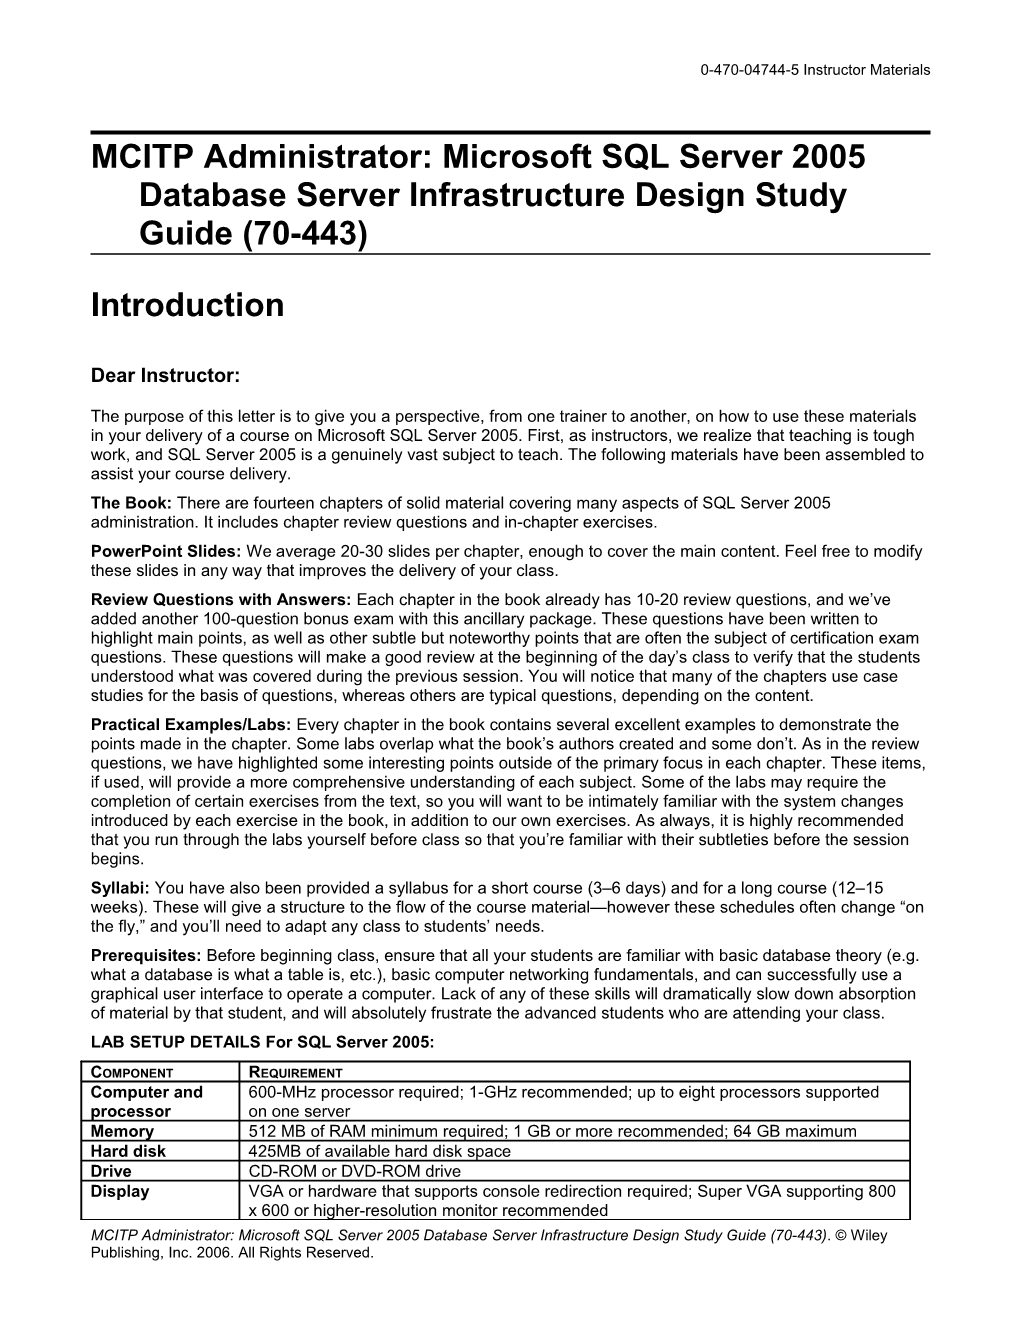 MCITP Administrator: Microsoft SQL Server 2005 Database Server Infrastructure Design Study